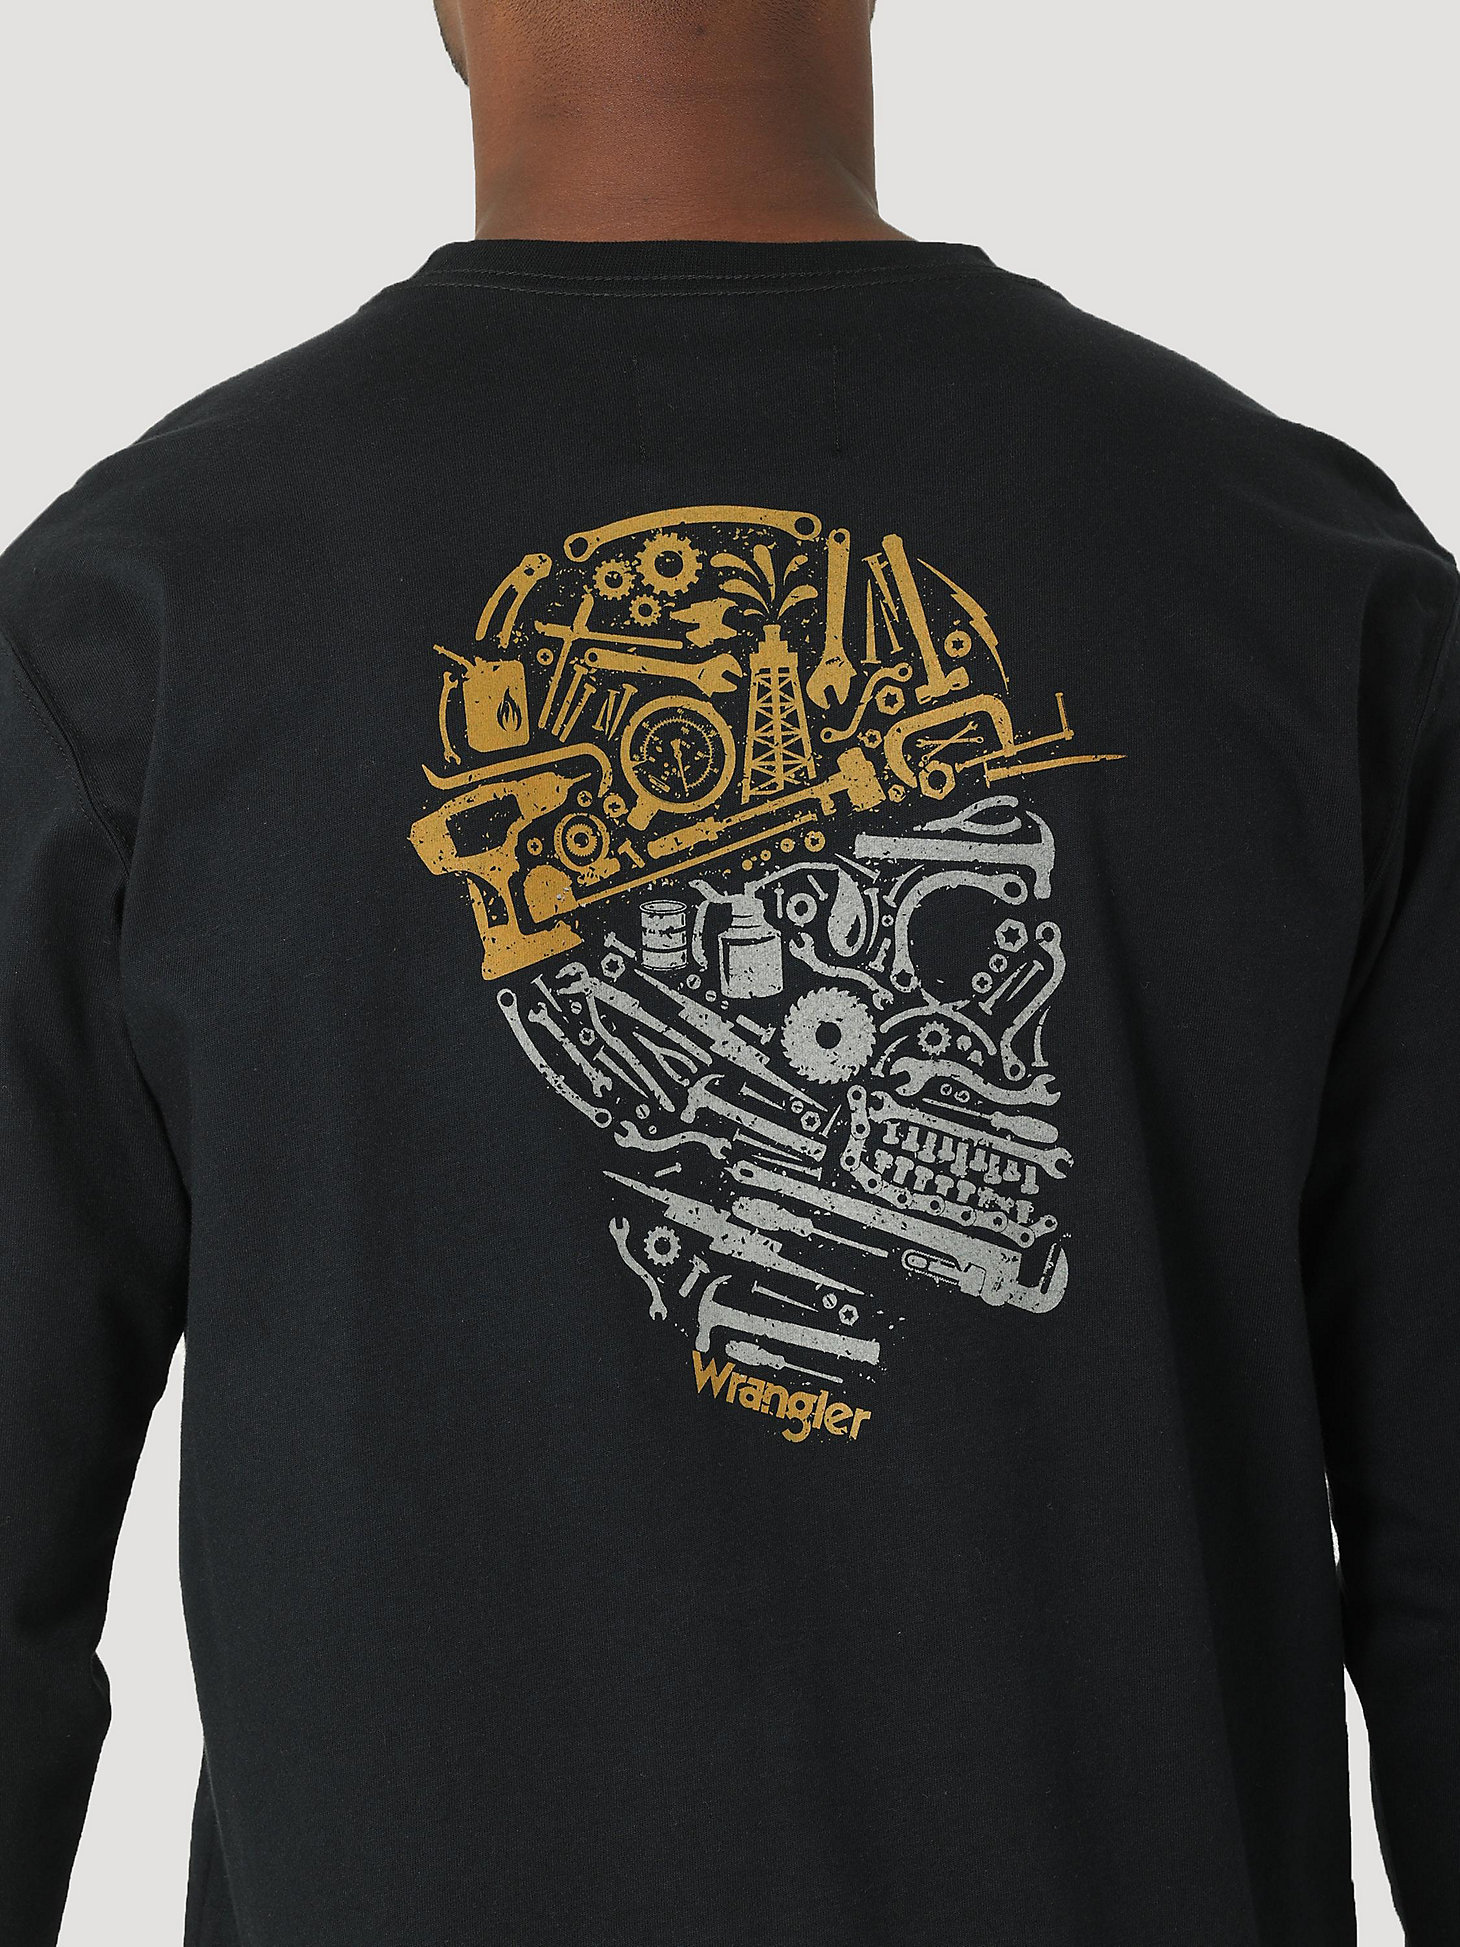 FR LS Skull Tools Logo Graphic T-Shirt in Black alternative view 2